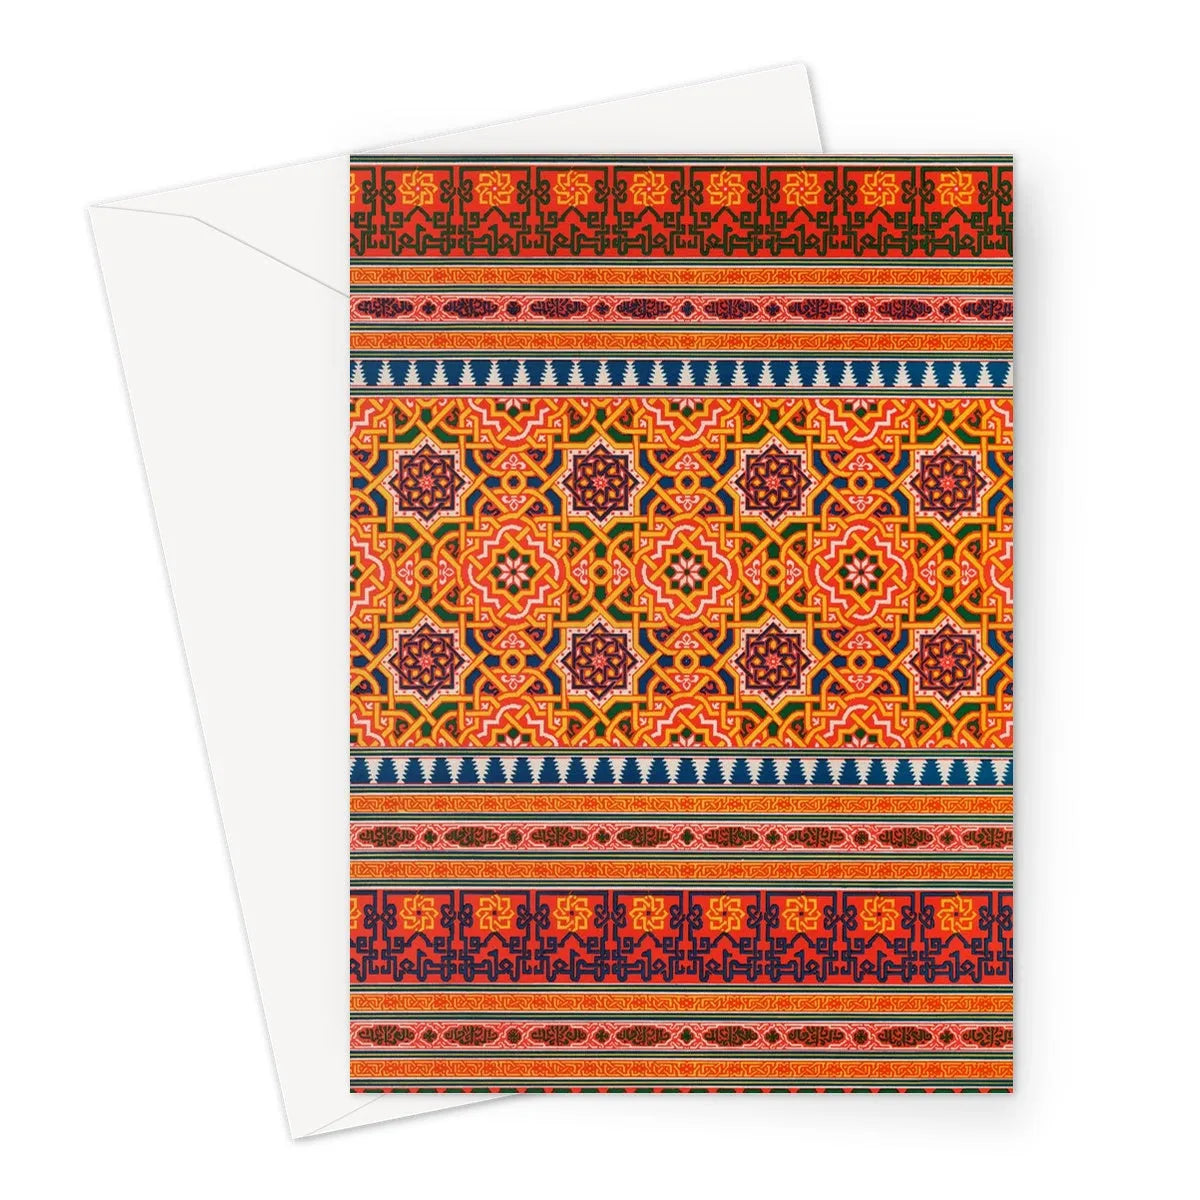 Emile Prisses D’avennes La Decoration Arabe Plate 9 + 10 Greeting Card - A5 Portrait / 1 Card - Greeting & Note Cards